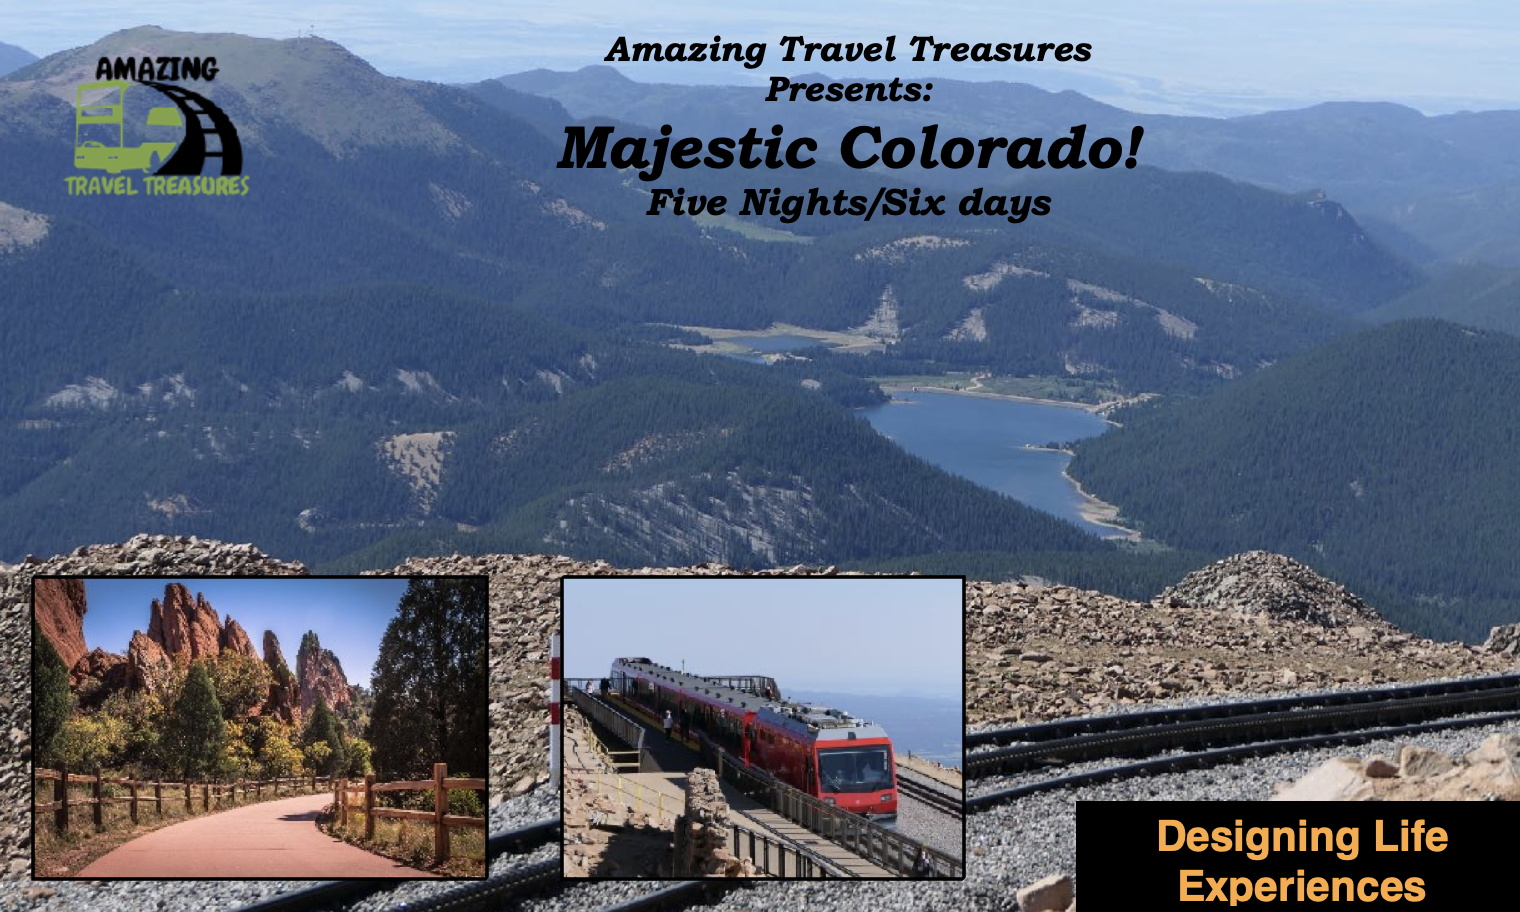 Majestic Colorado          (Five Nights/Six Days)